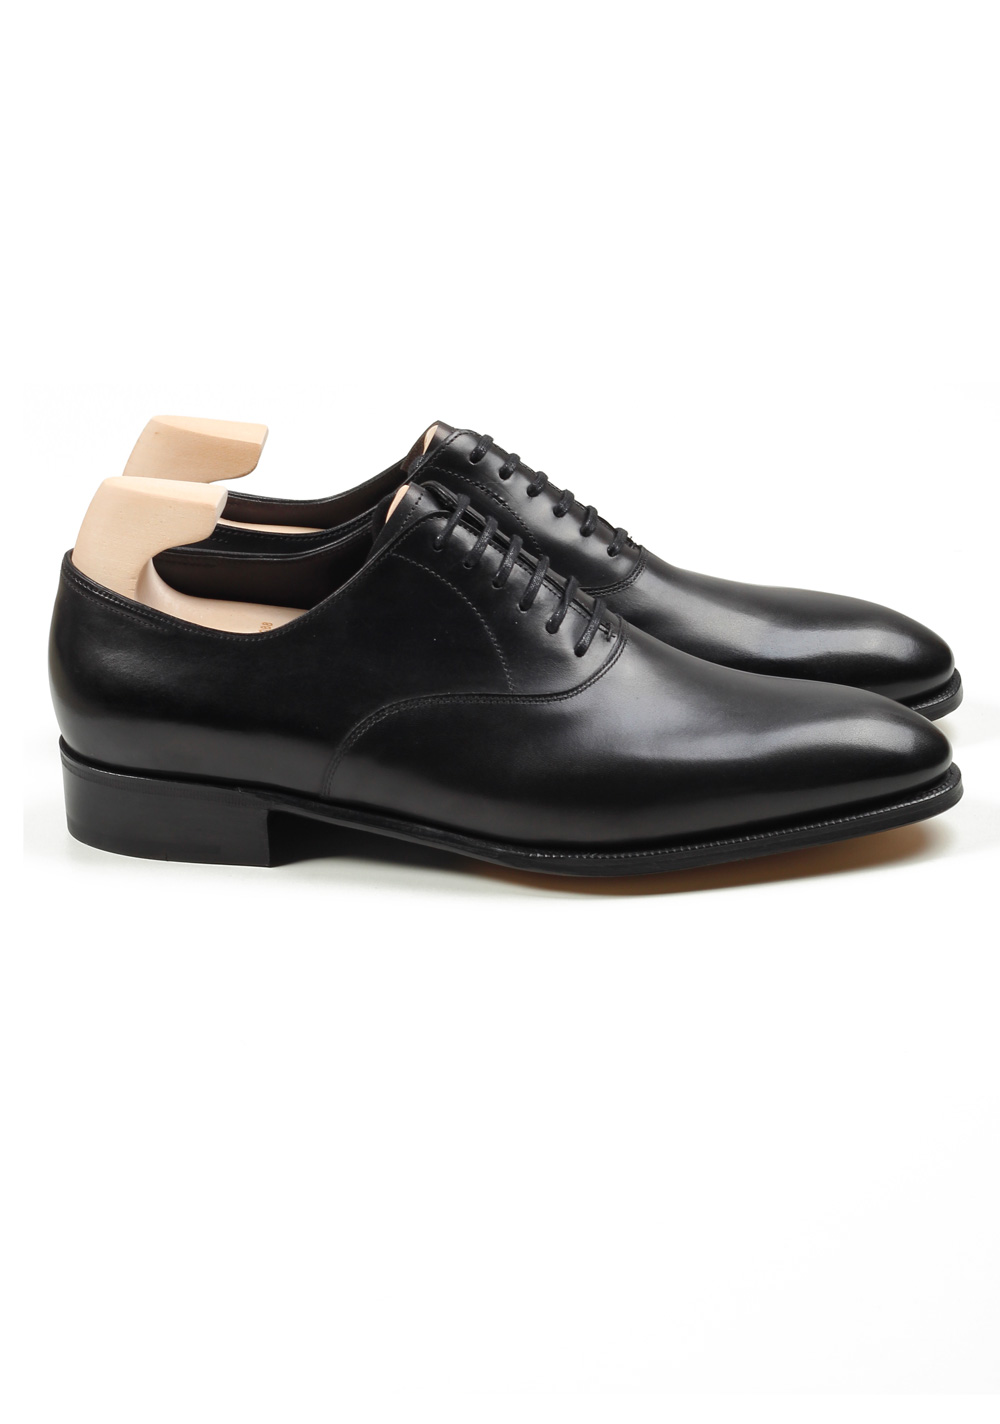 John Lobb Seaton Black Oxford Shoes 